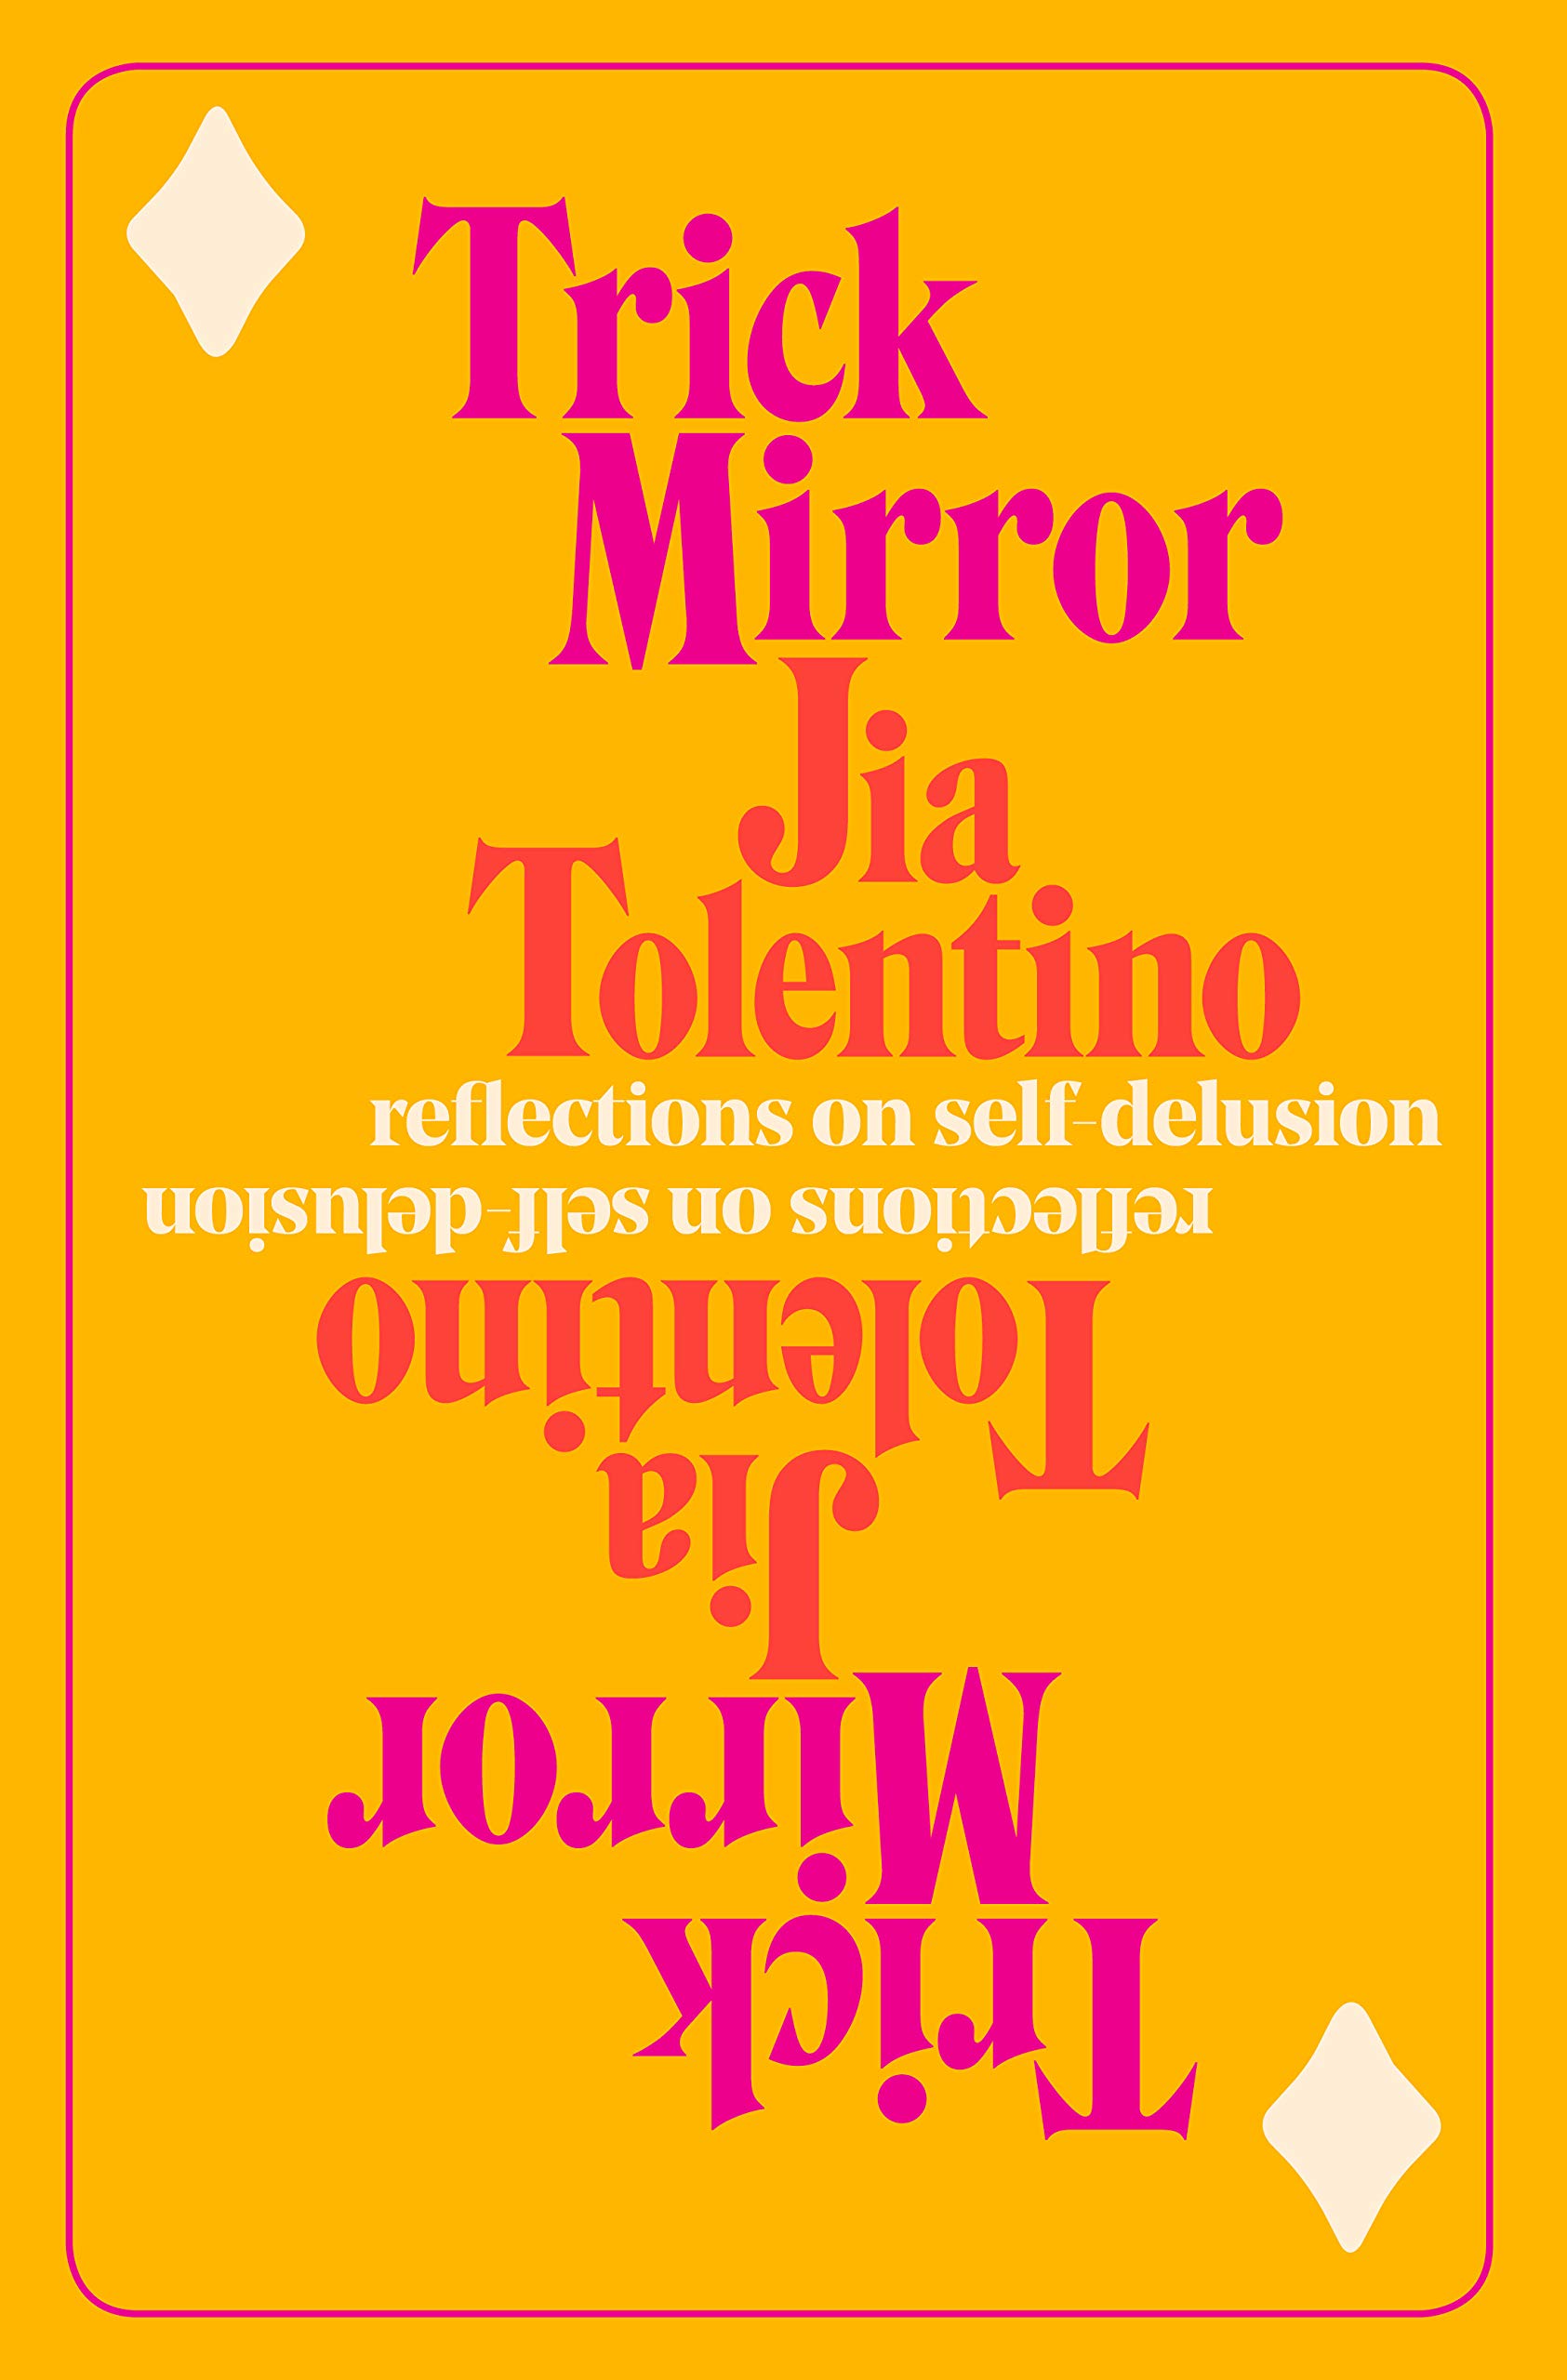 View description for 'Trick Mirror'